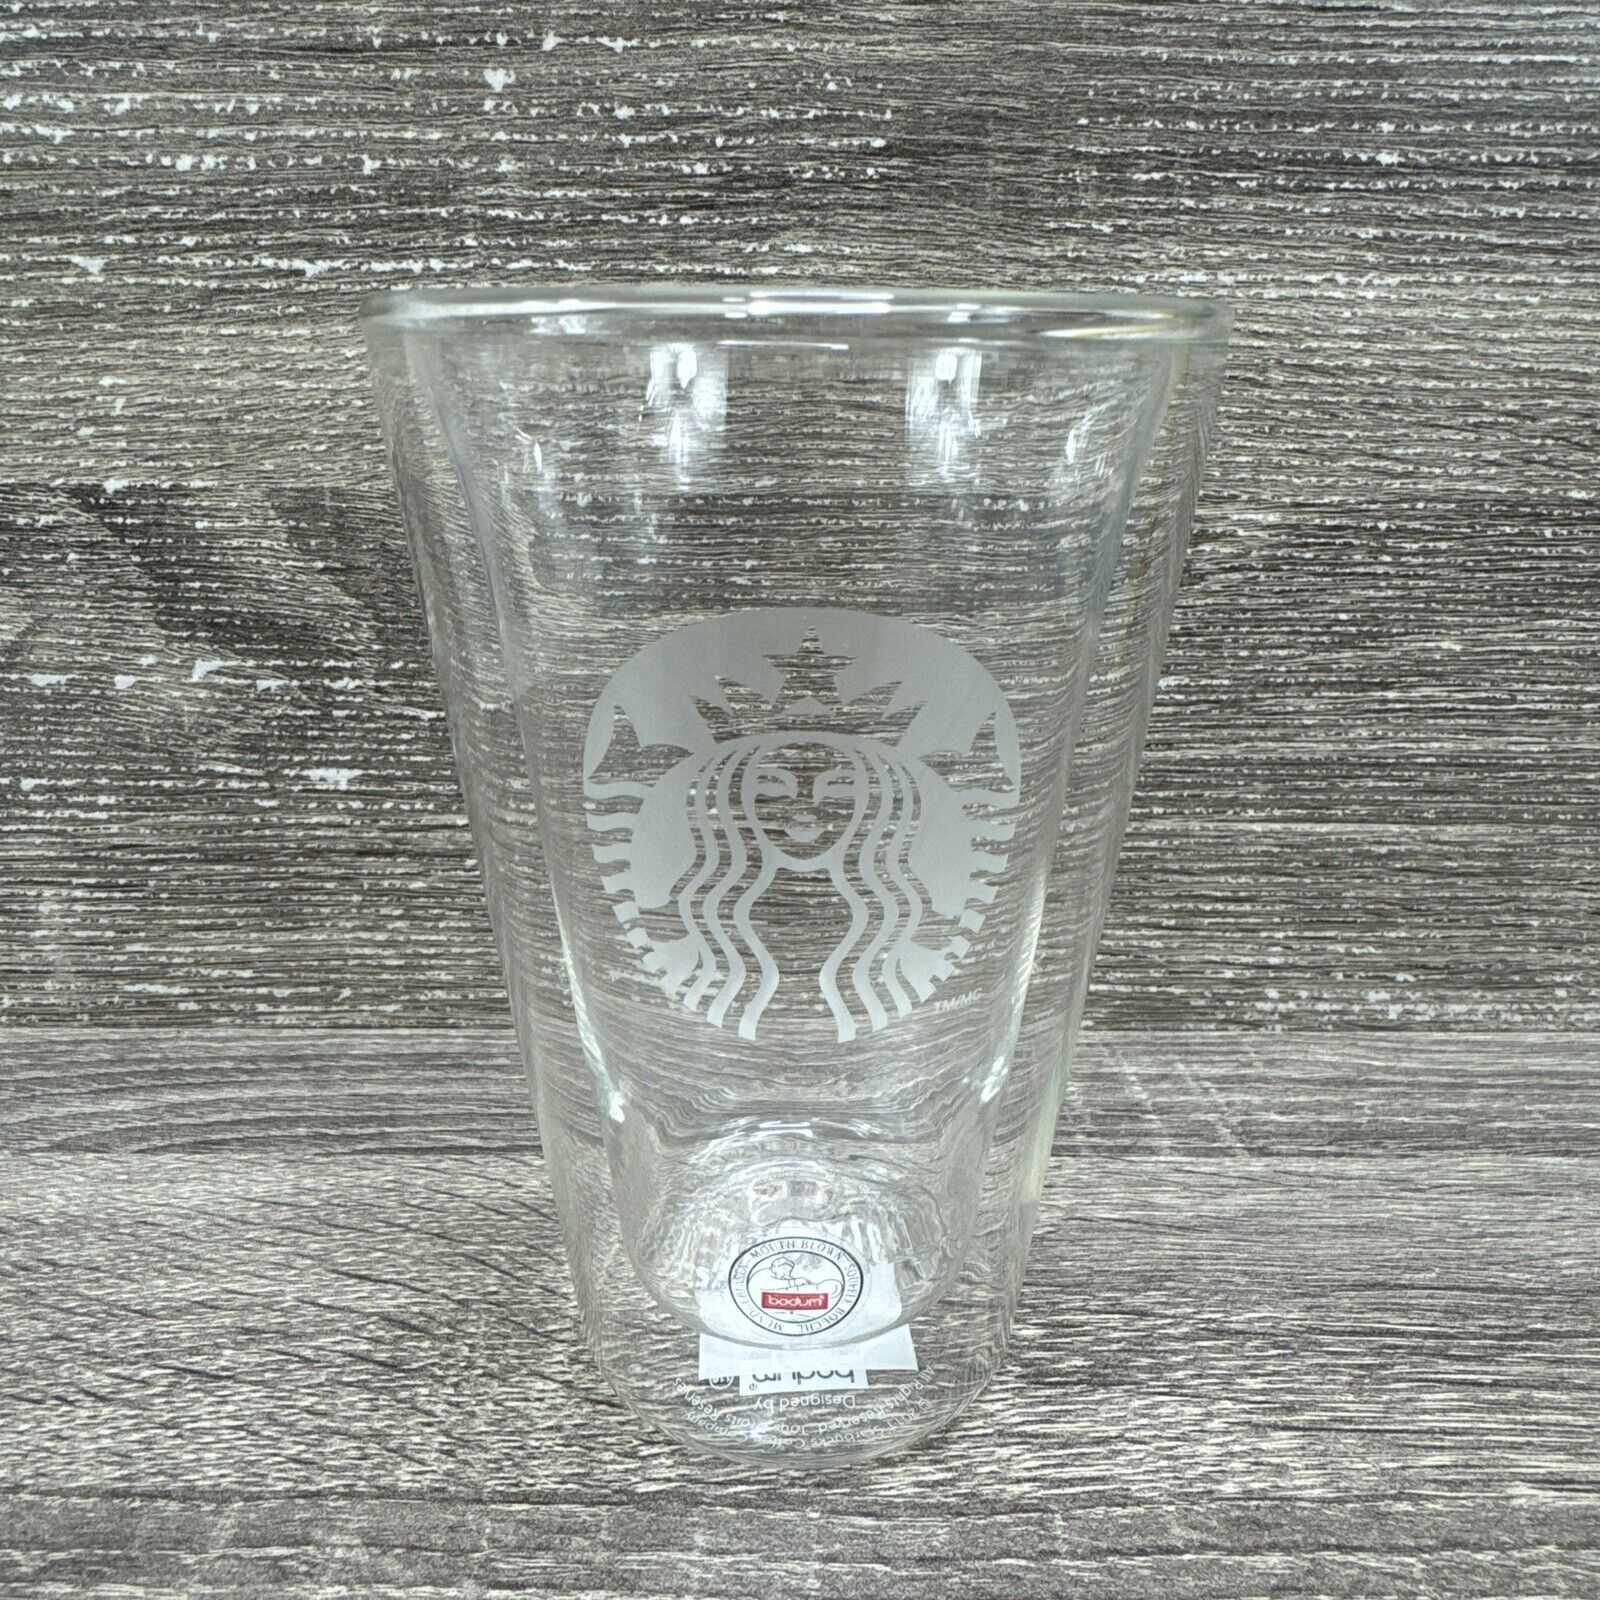 TEAVANA STARBUCKS 14oz BODUM DOUBLE WALL GLASS CUP SIREN ETCHED RETIRED 2011 NWT